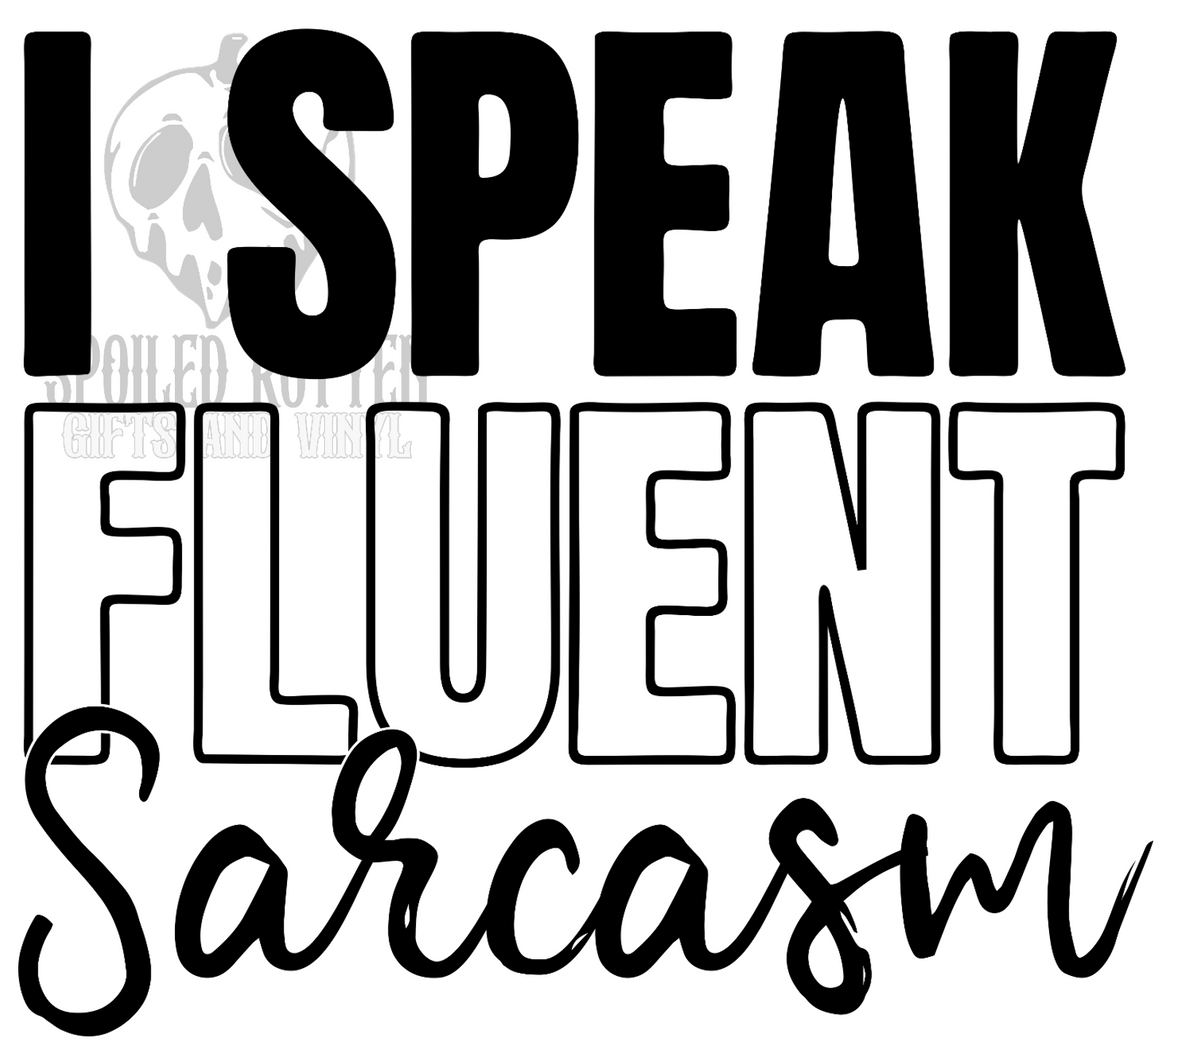 I Speak Fluent Sarcasm vinyl decal